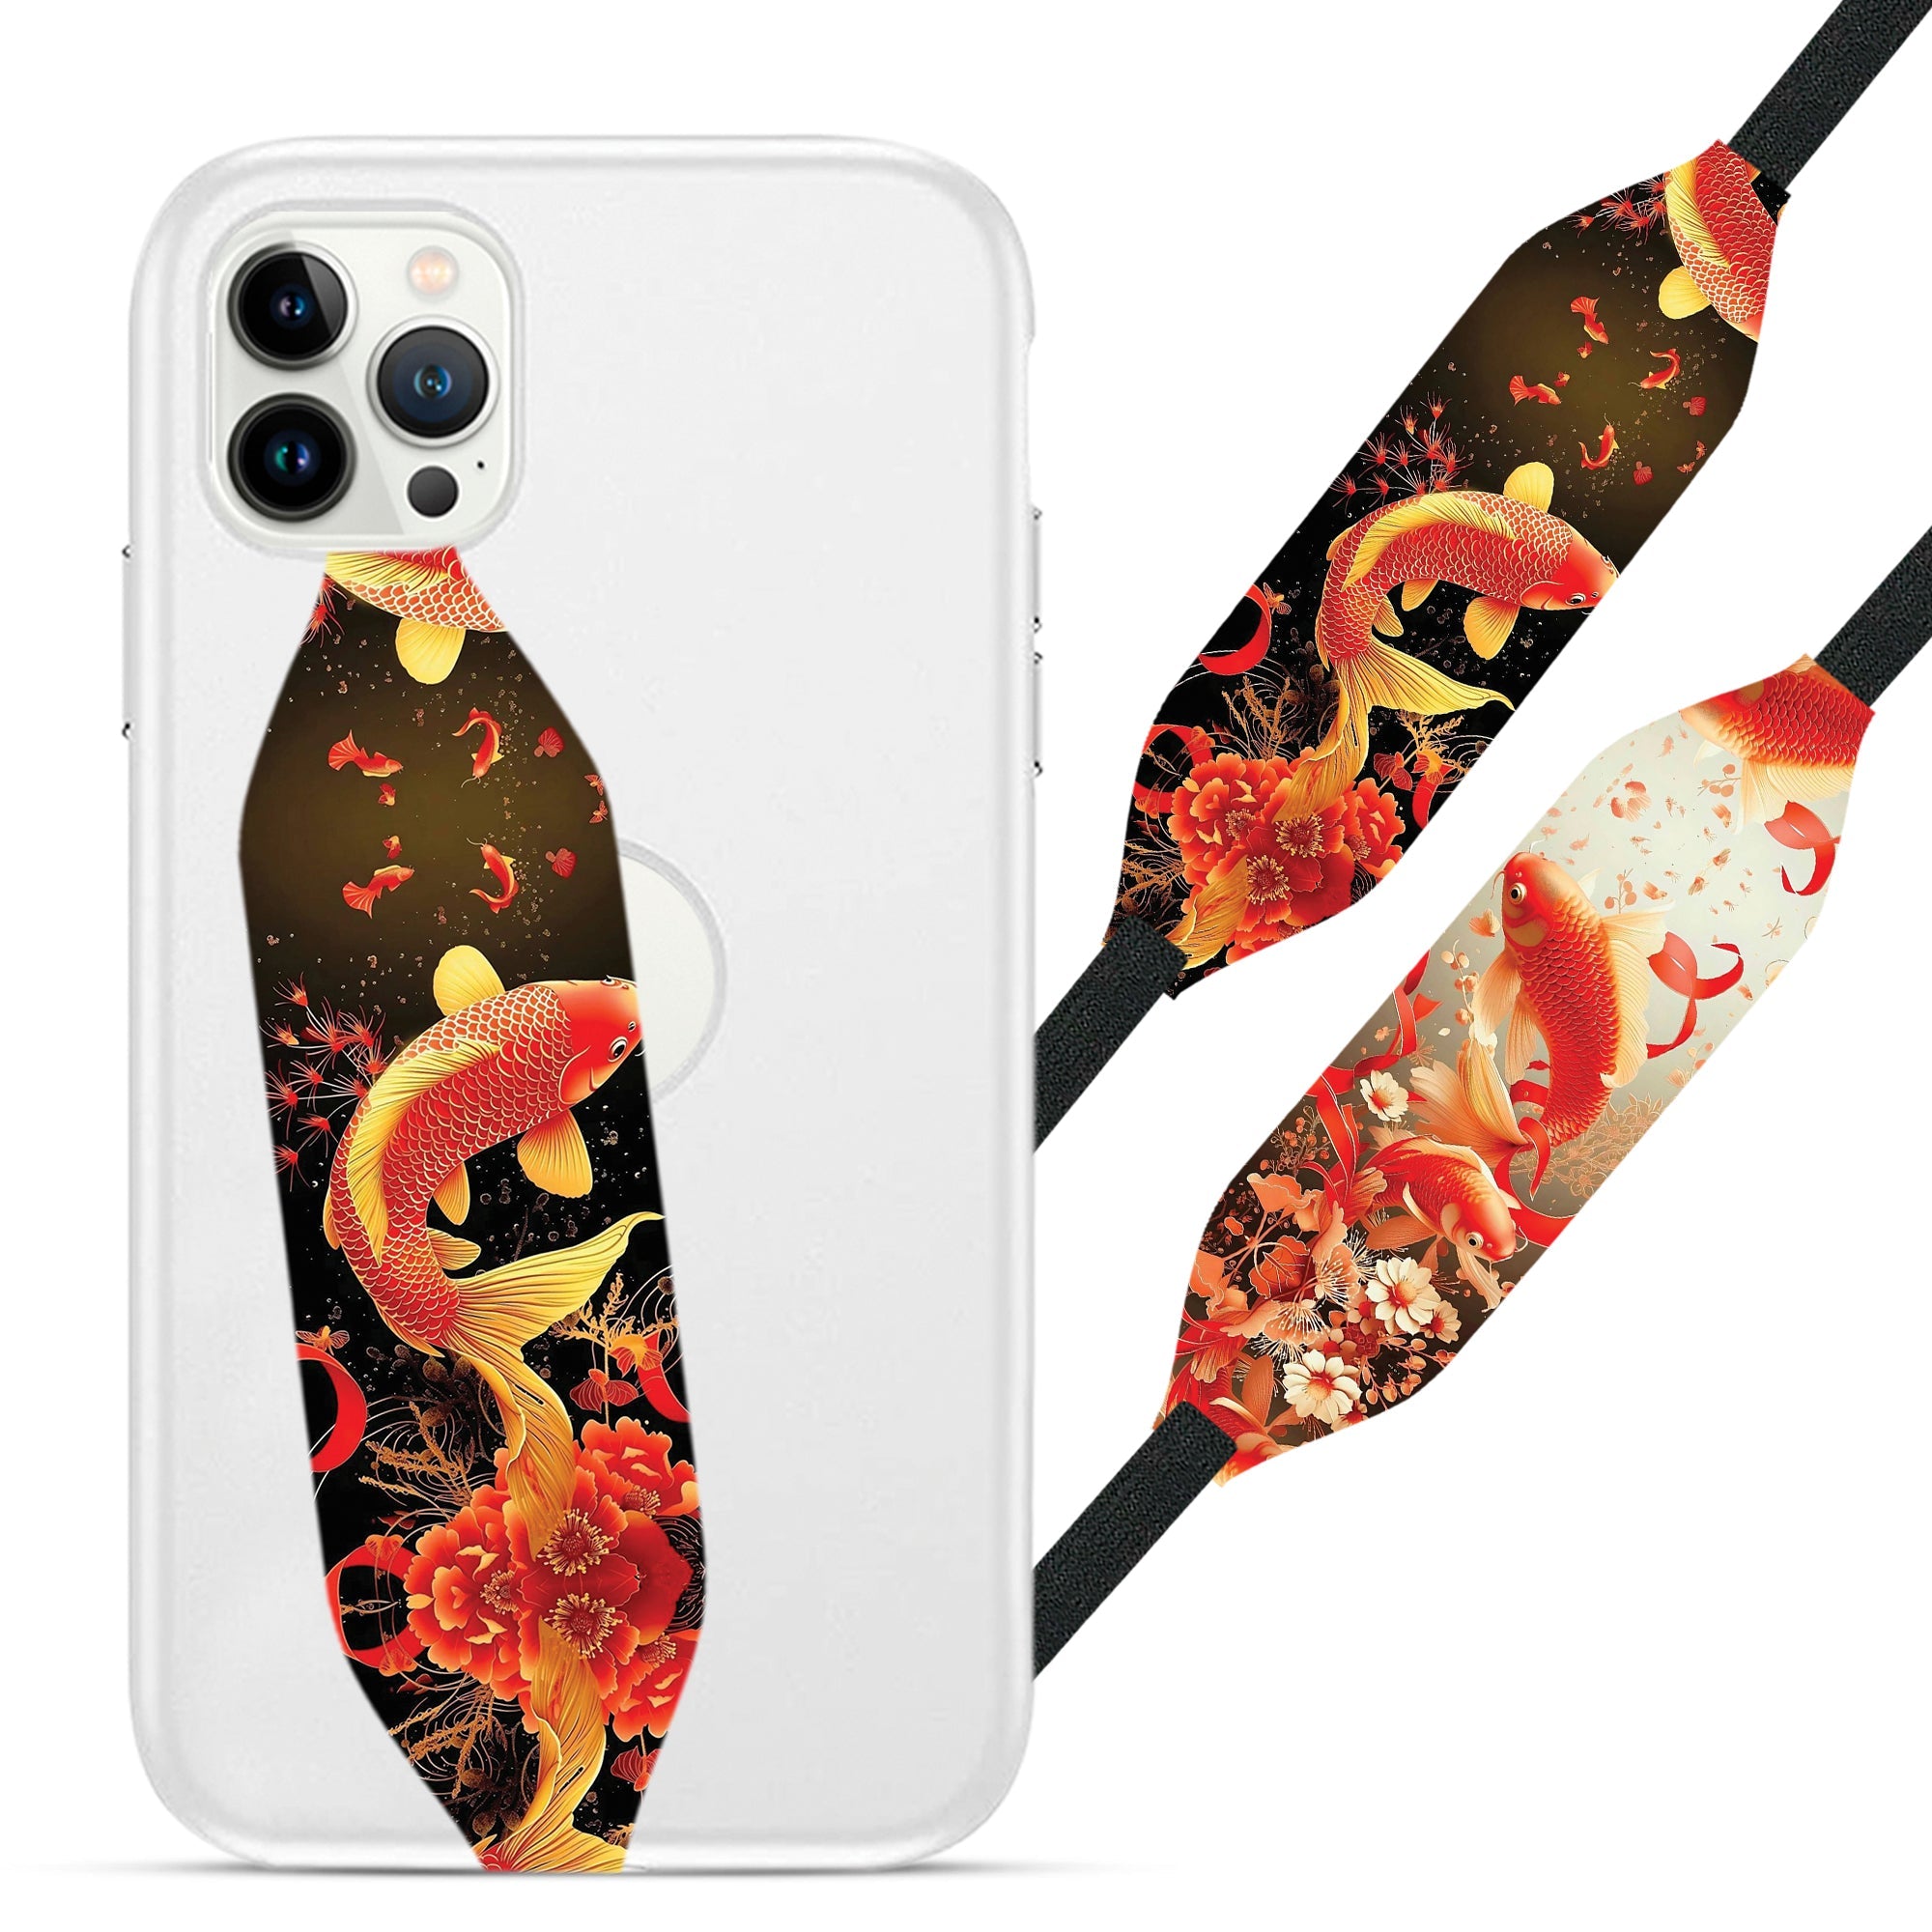 Universal Phone Grip Strap - Fish